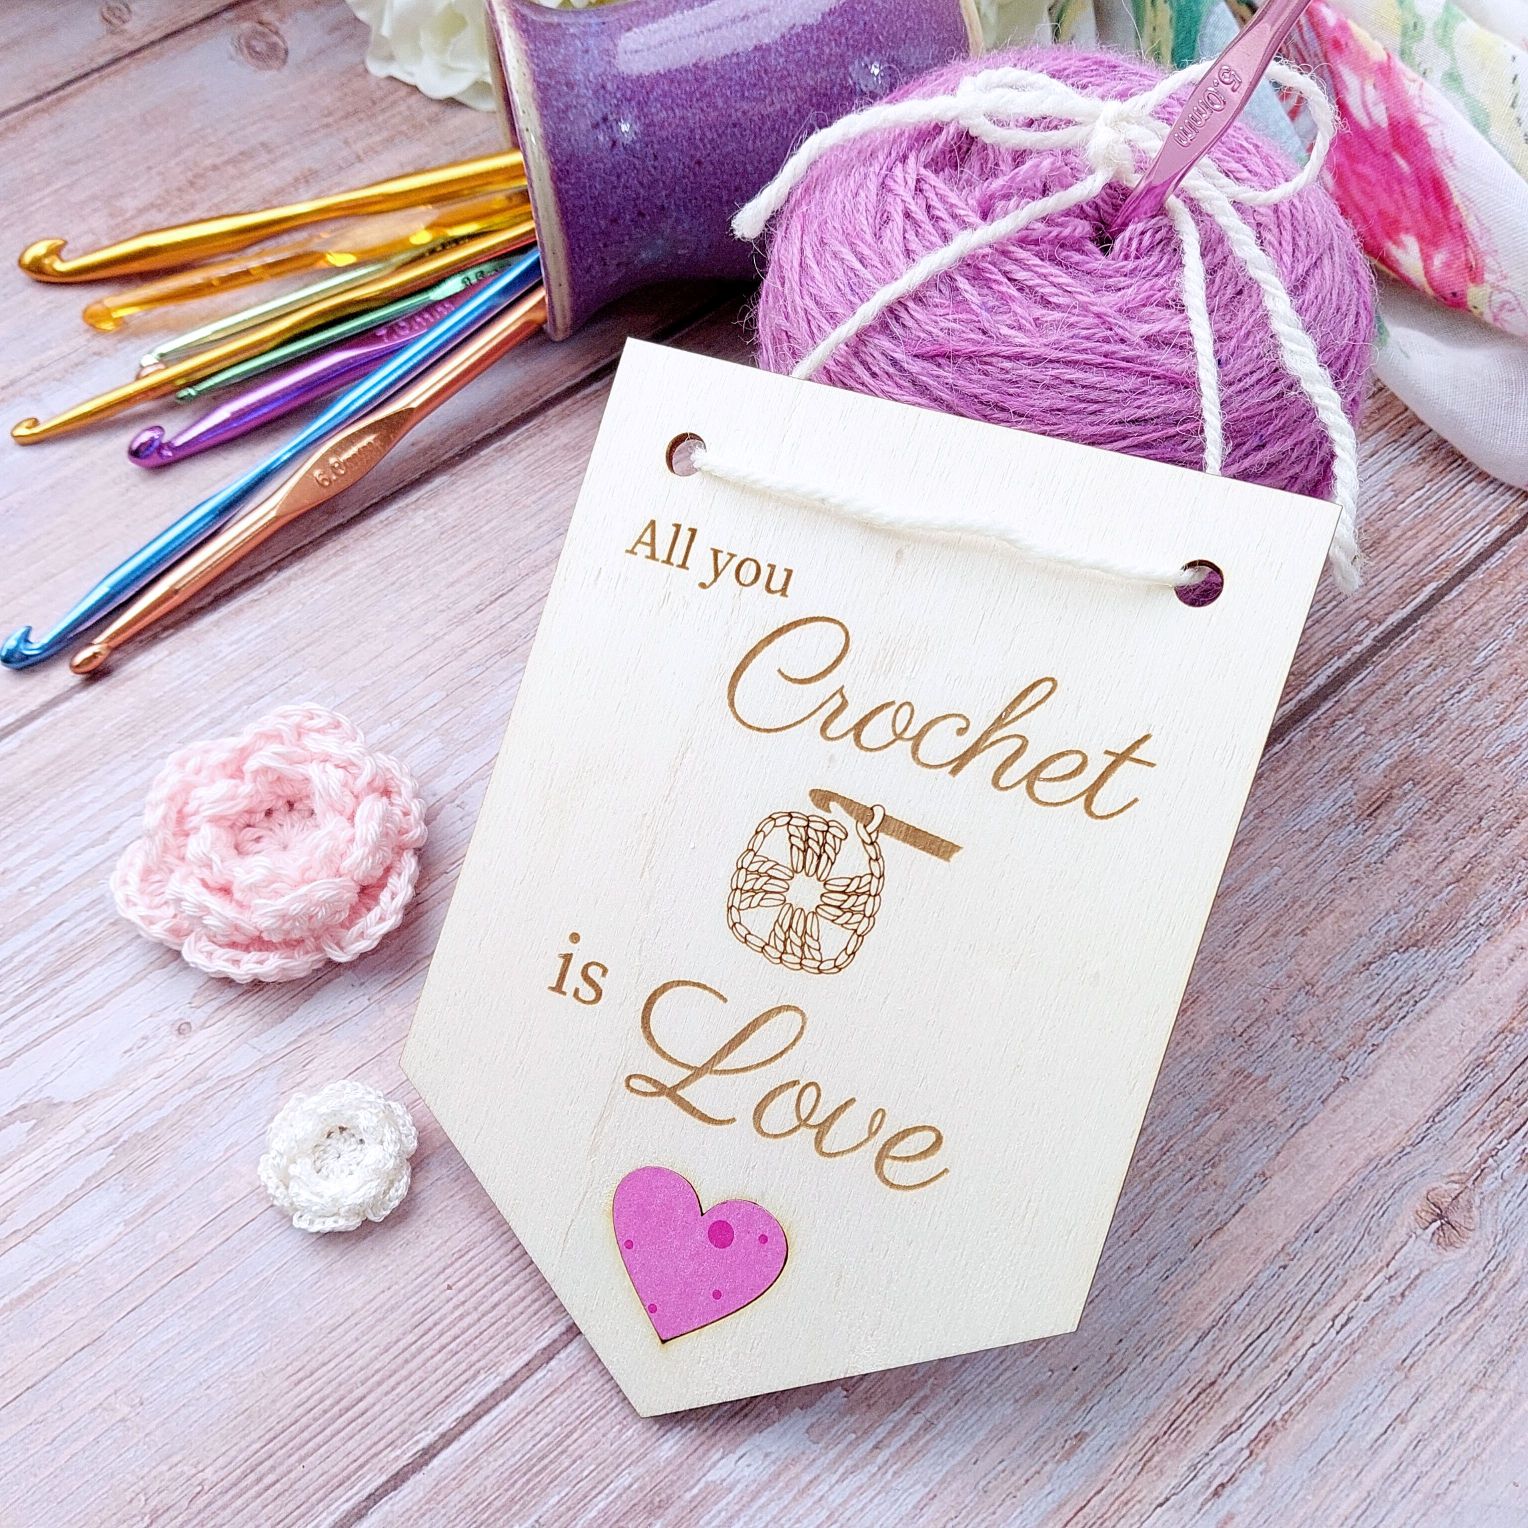 Holzwimpel "All you crochet is love" - mit Häkelnadeln